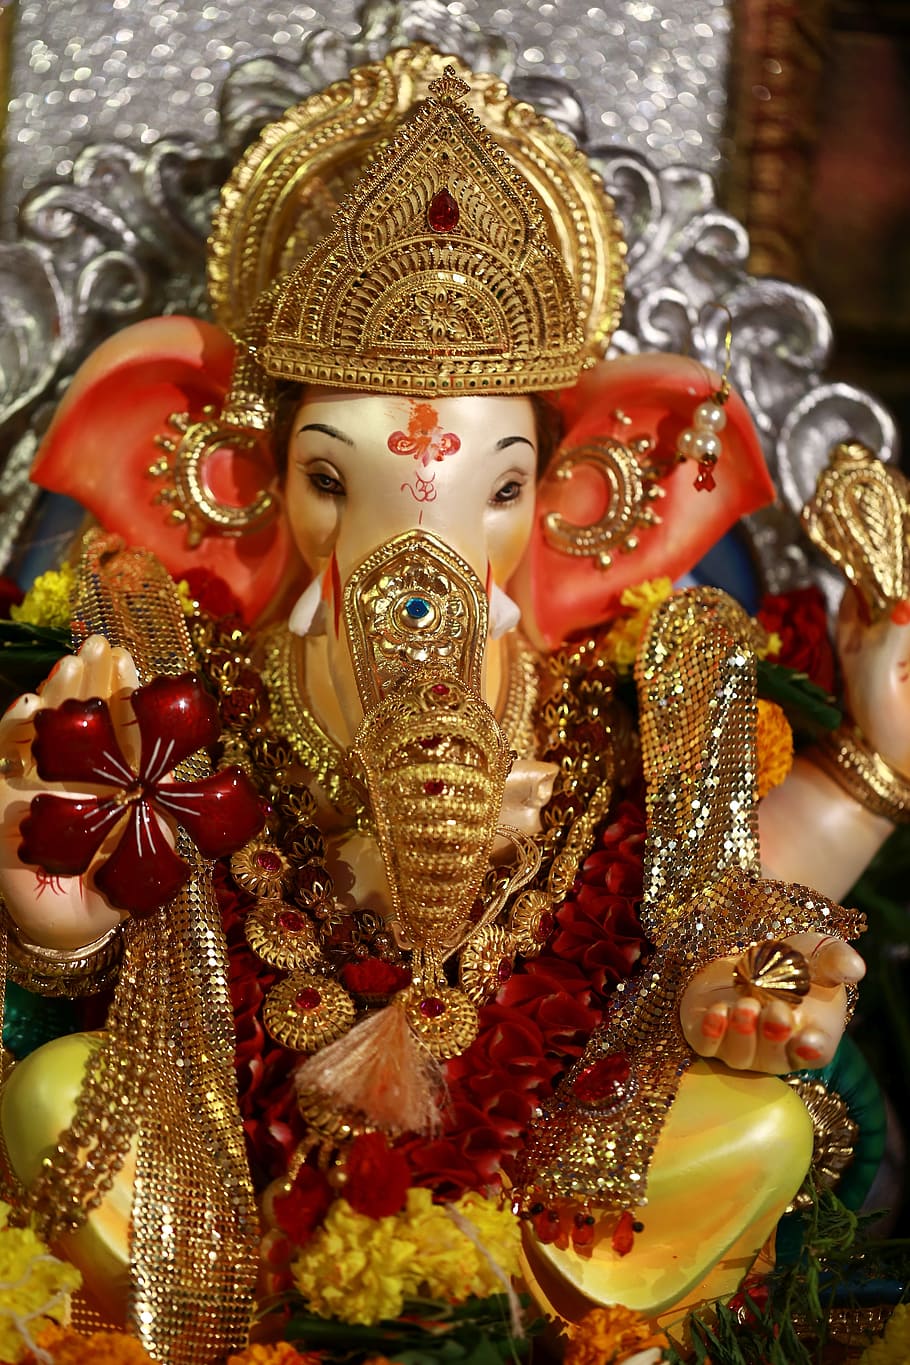 Tuhan figur Ganesha, Ganesha, Ganapati, Dewa Hindu, Dewa, representasi manusia, seni dan kerajinan, representasi, close-up, untuk dijual